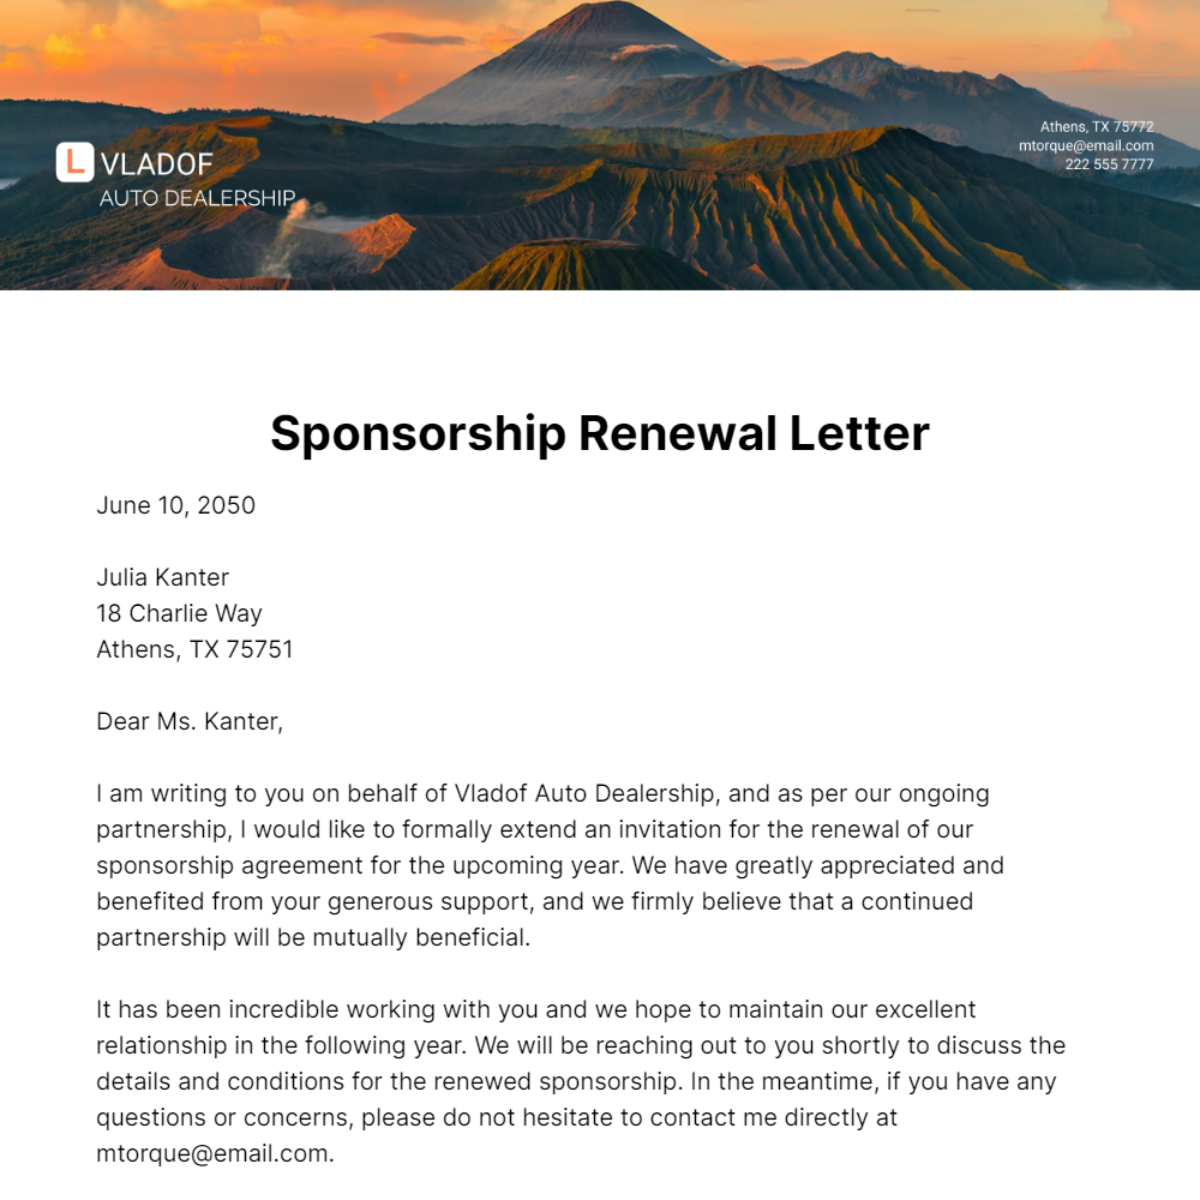 Sponsorship Renewal Letter   Template